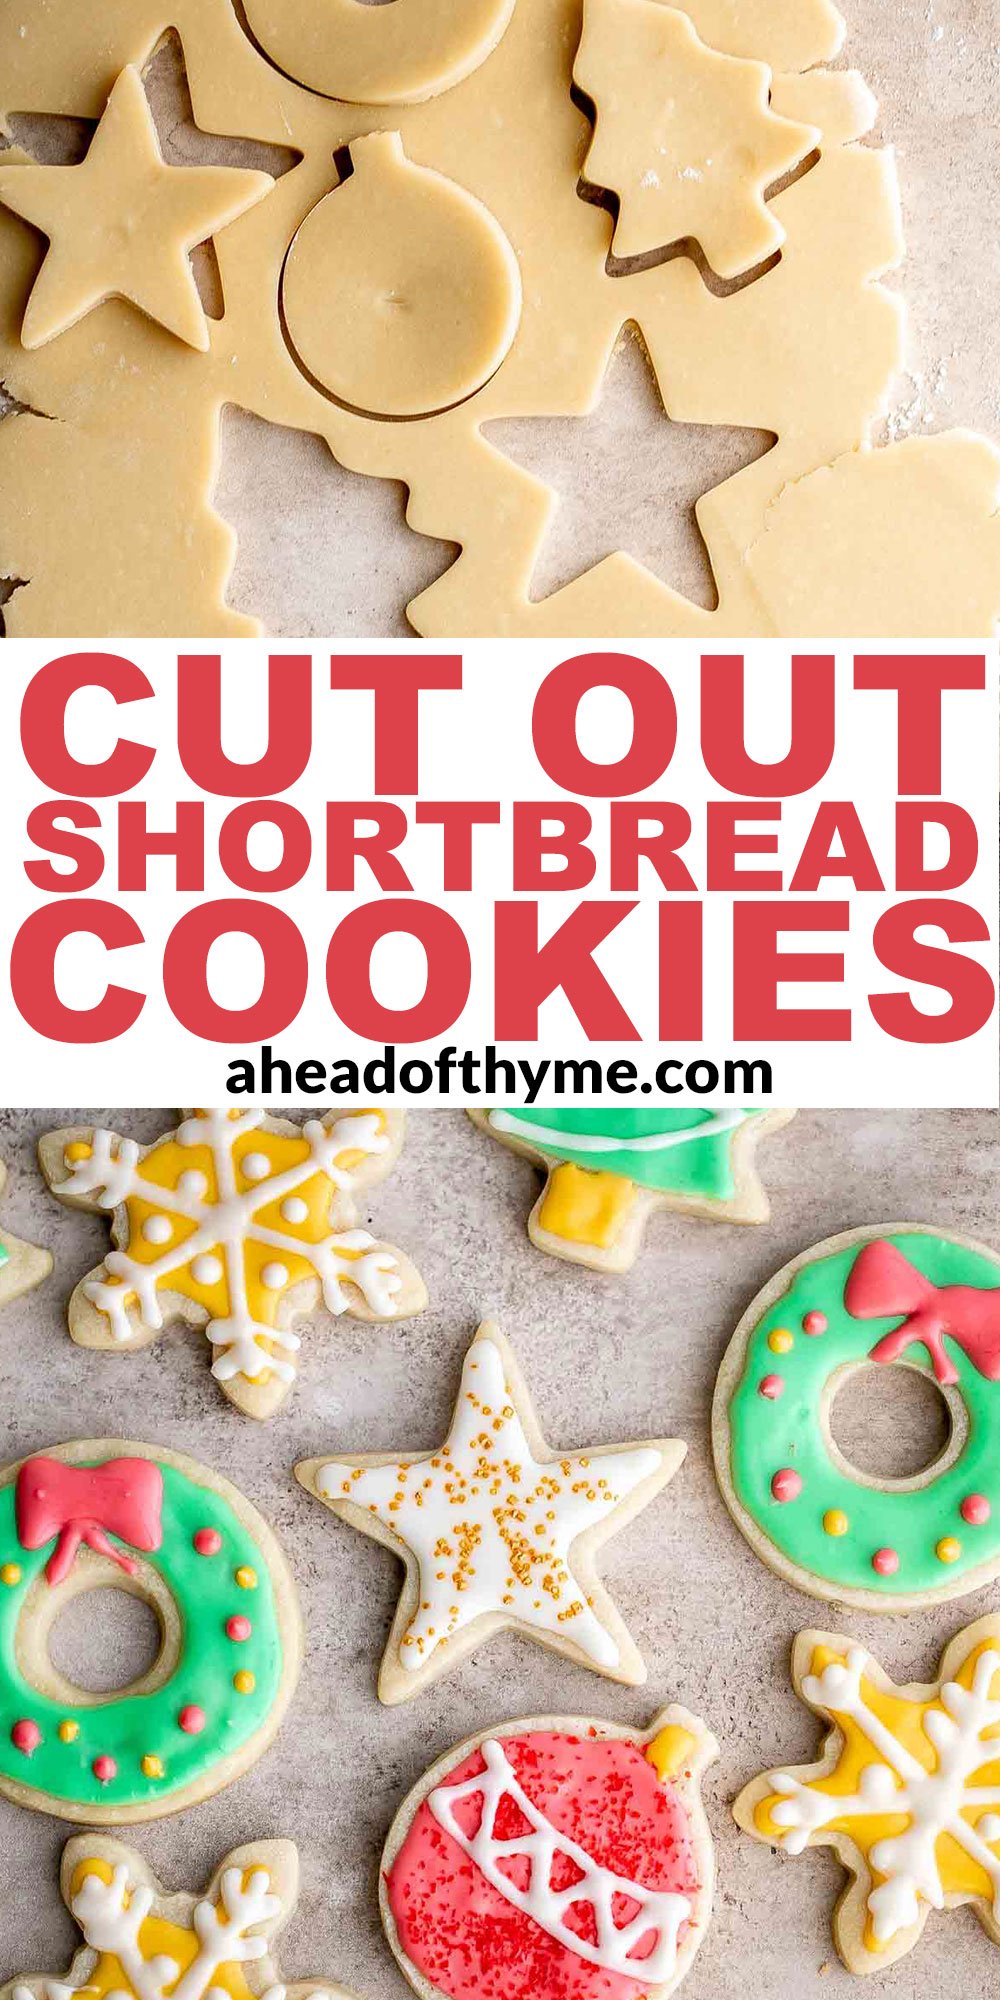 Cut Out Shortbread Cookies